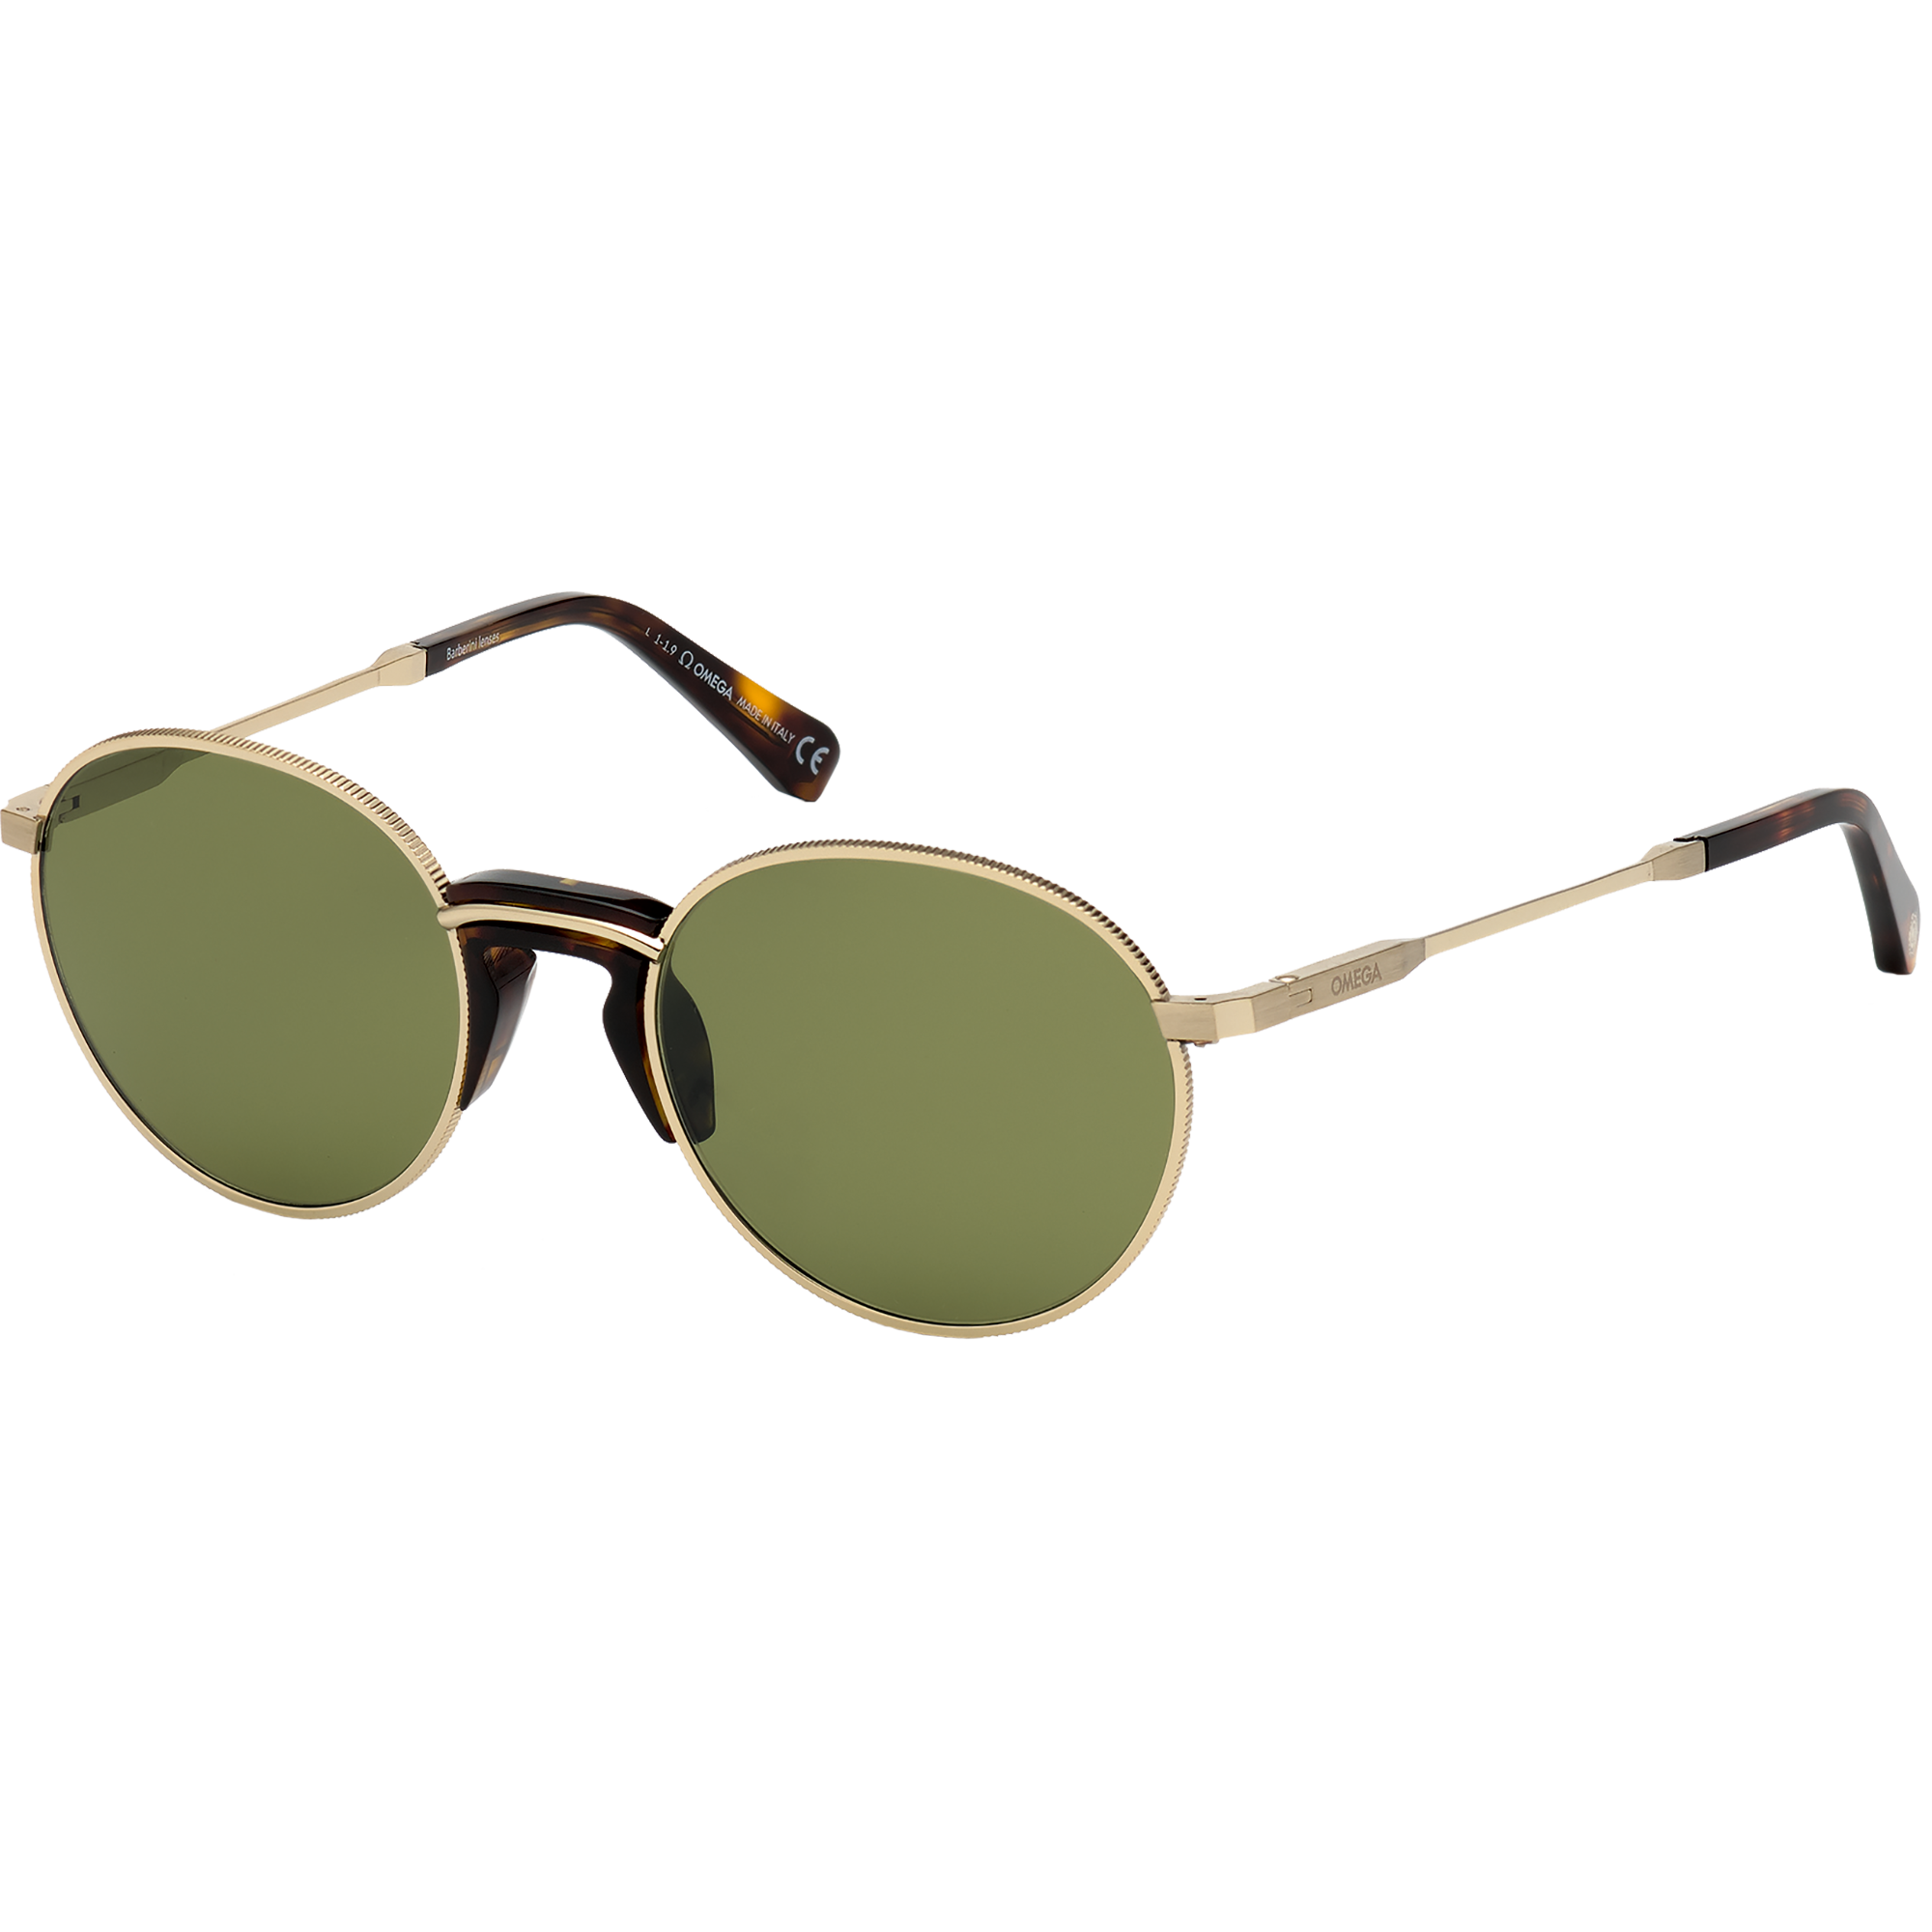 Óculos de Sol - Estilo redondo, Homem - OM0019-H5332V